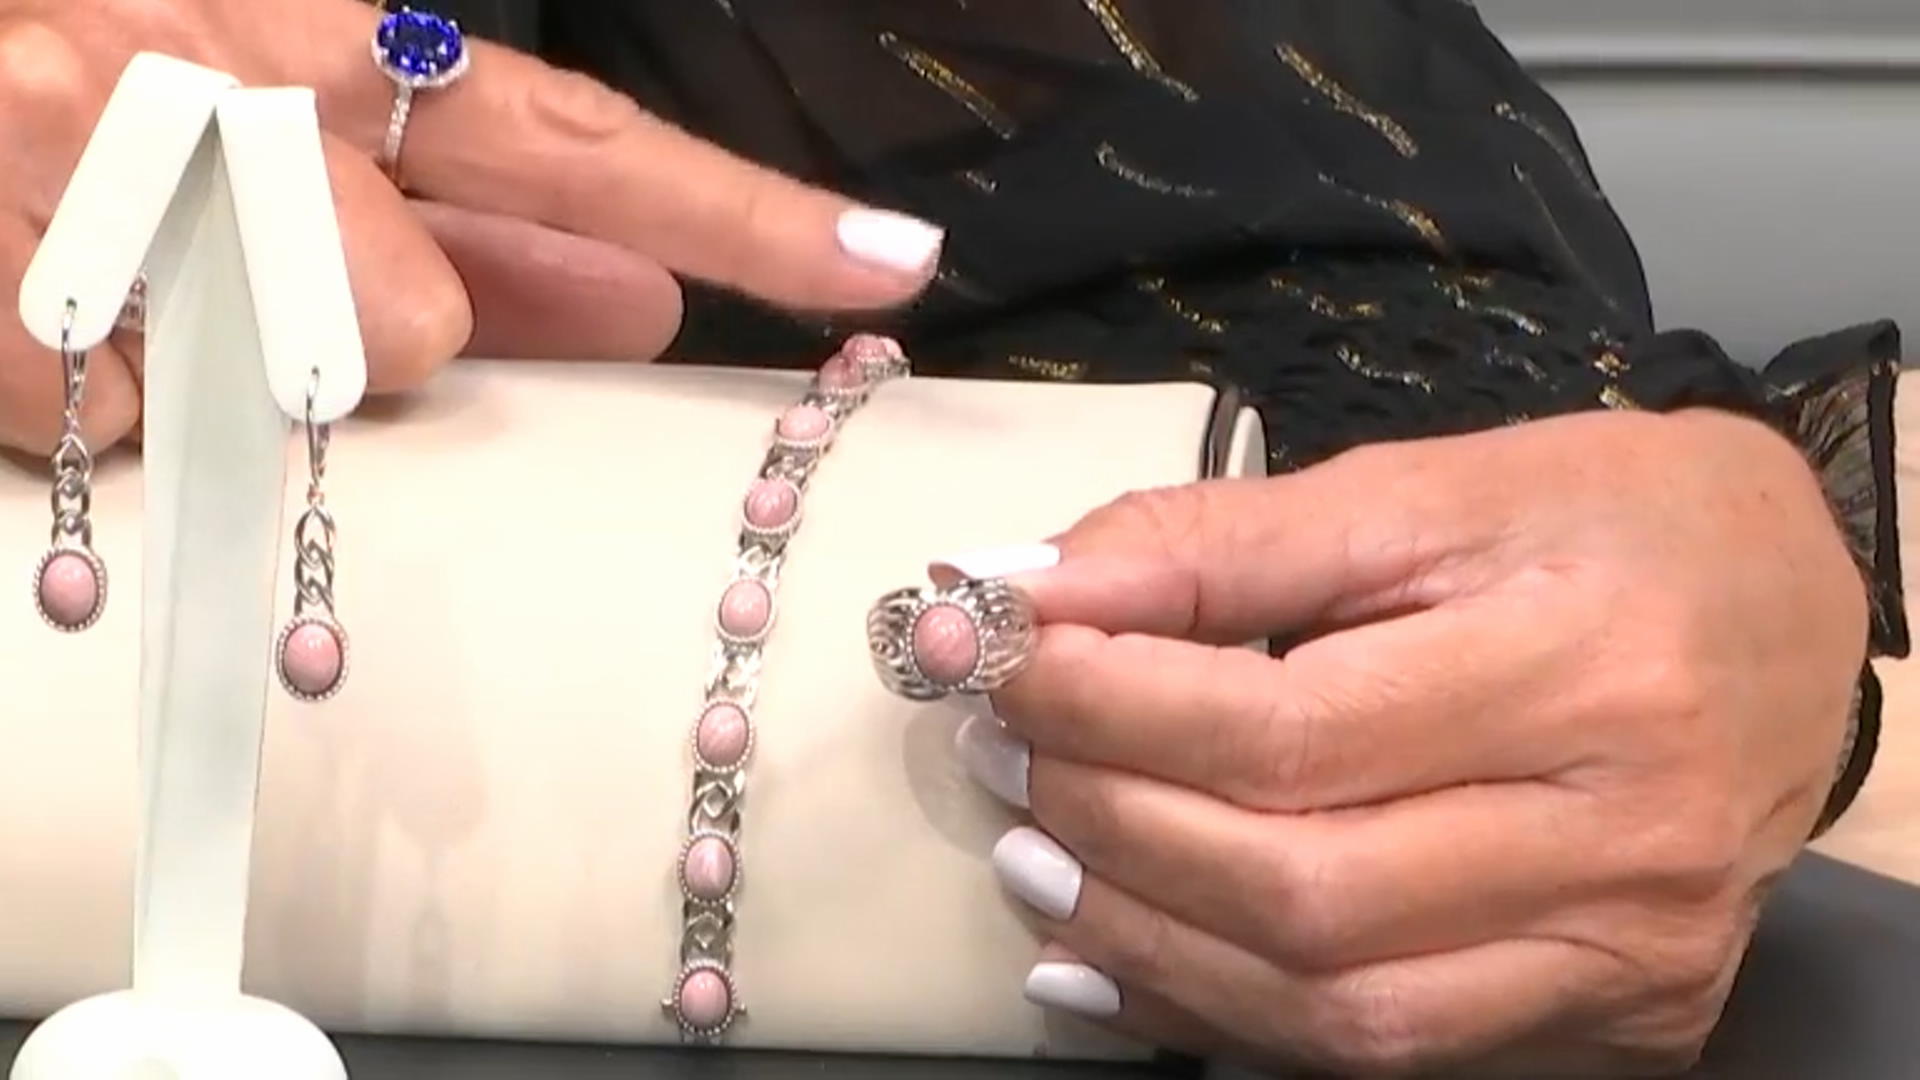 Pink Mookaite Rhodium Over Sterling Silver Tennis Bracelet Video Thumbnail